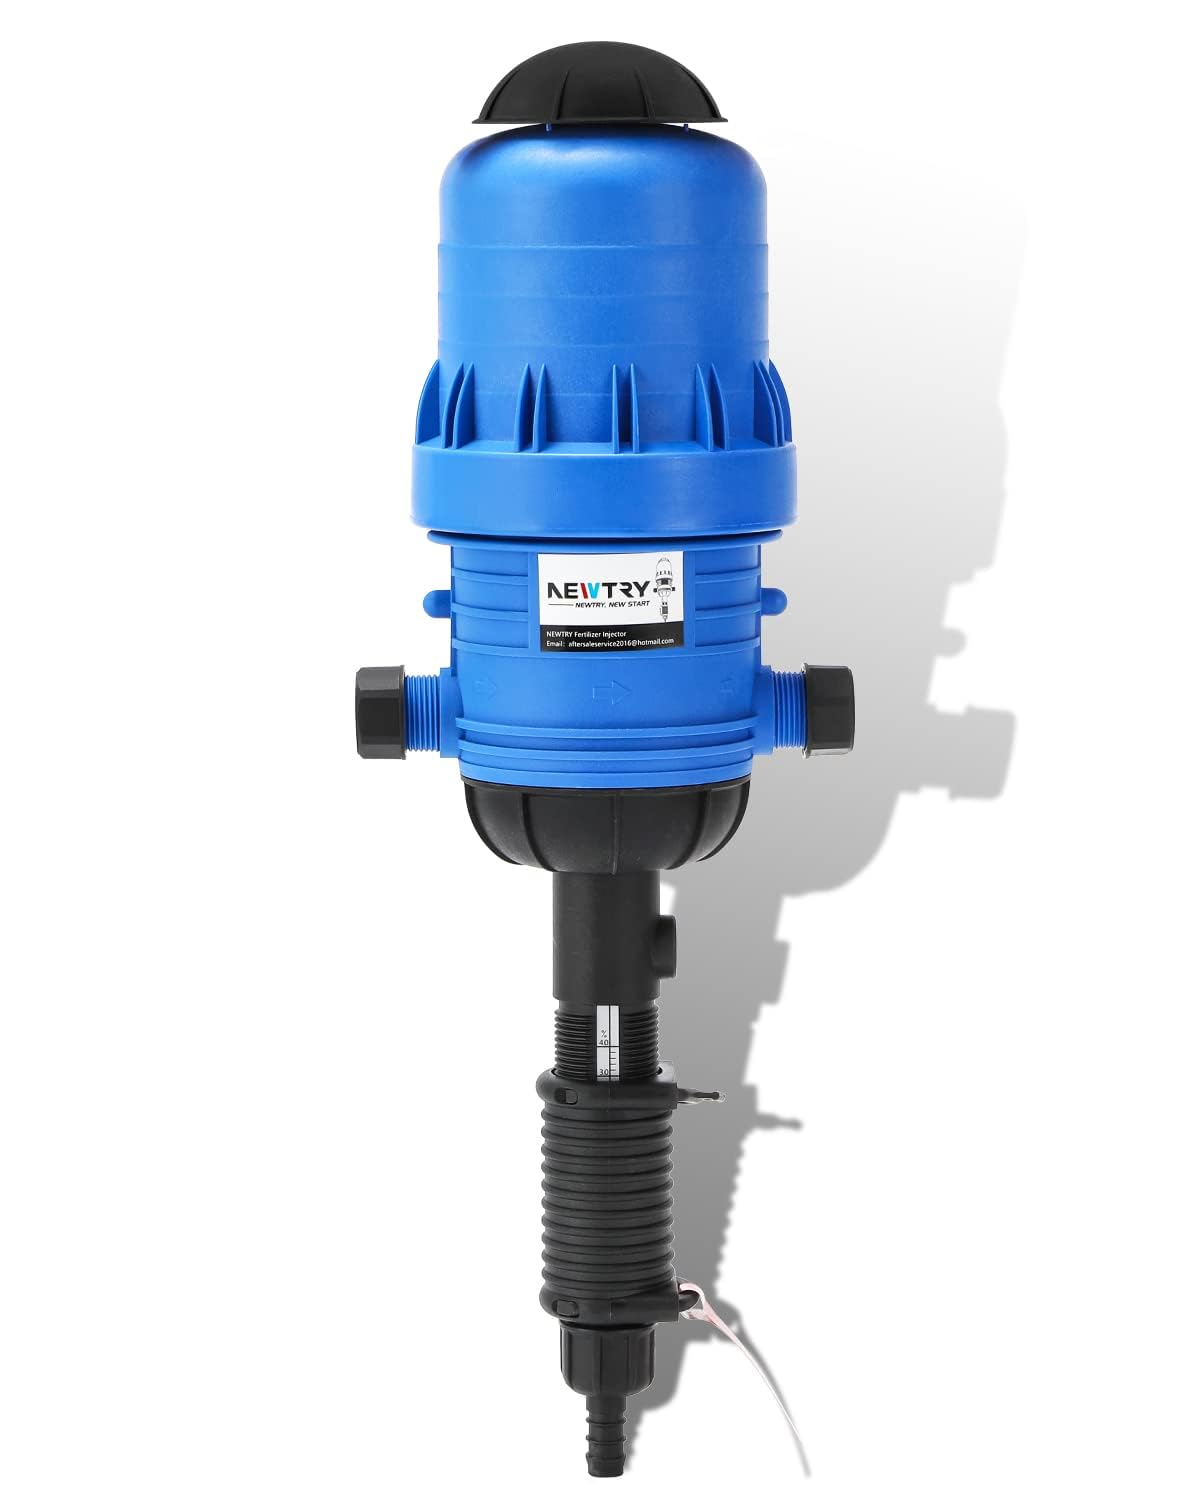 NEWTRY 0.4%~4% Adjustable Fertilizer Injector Water Powered Chemical Liquid Doser Dispenser 4.4~660.43 gallons/h Drip Irrigation